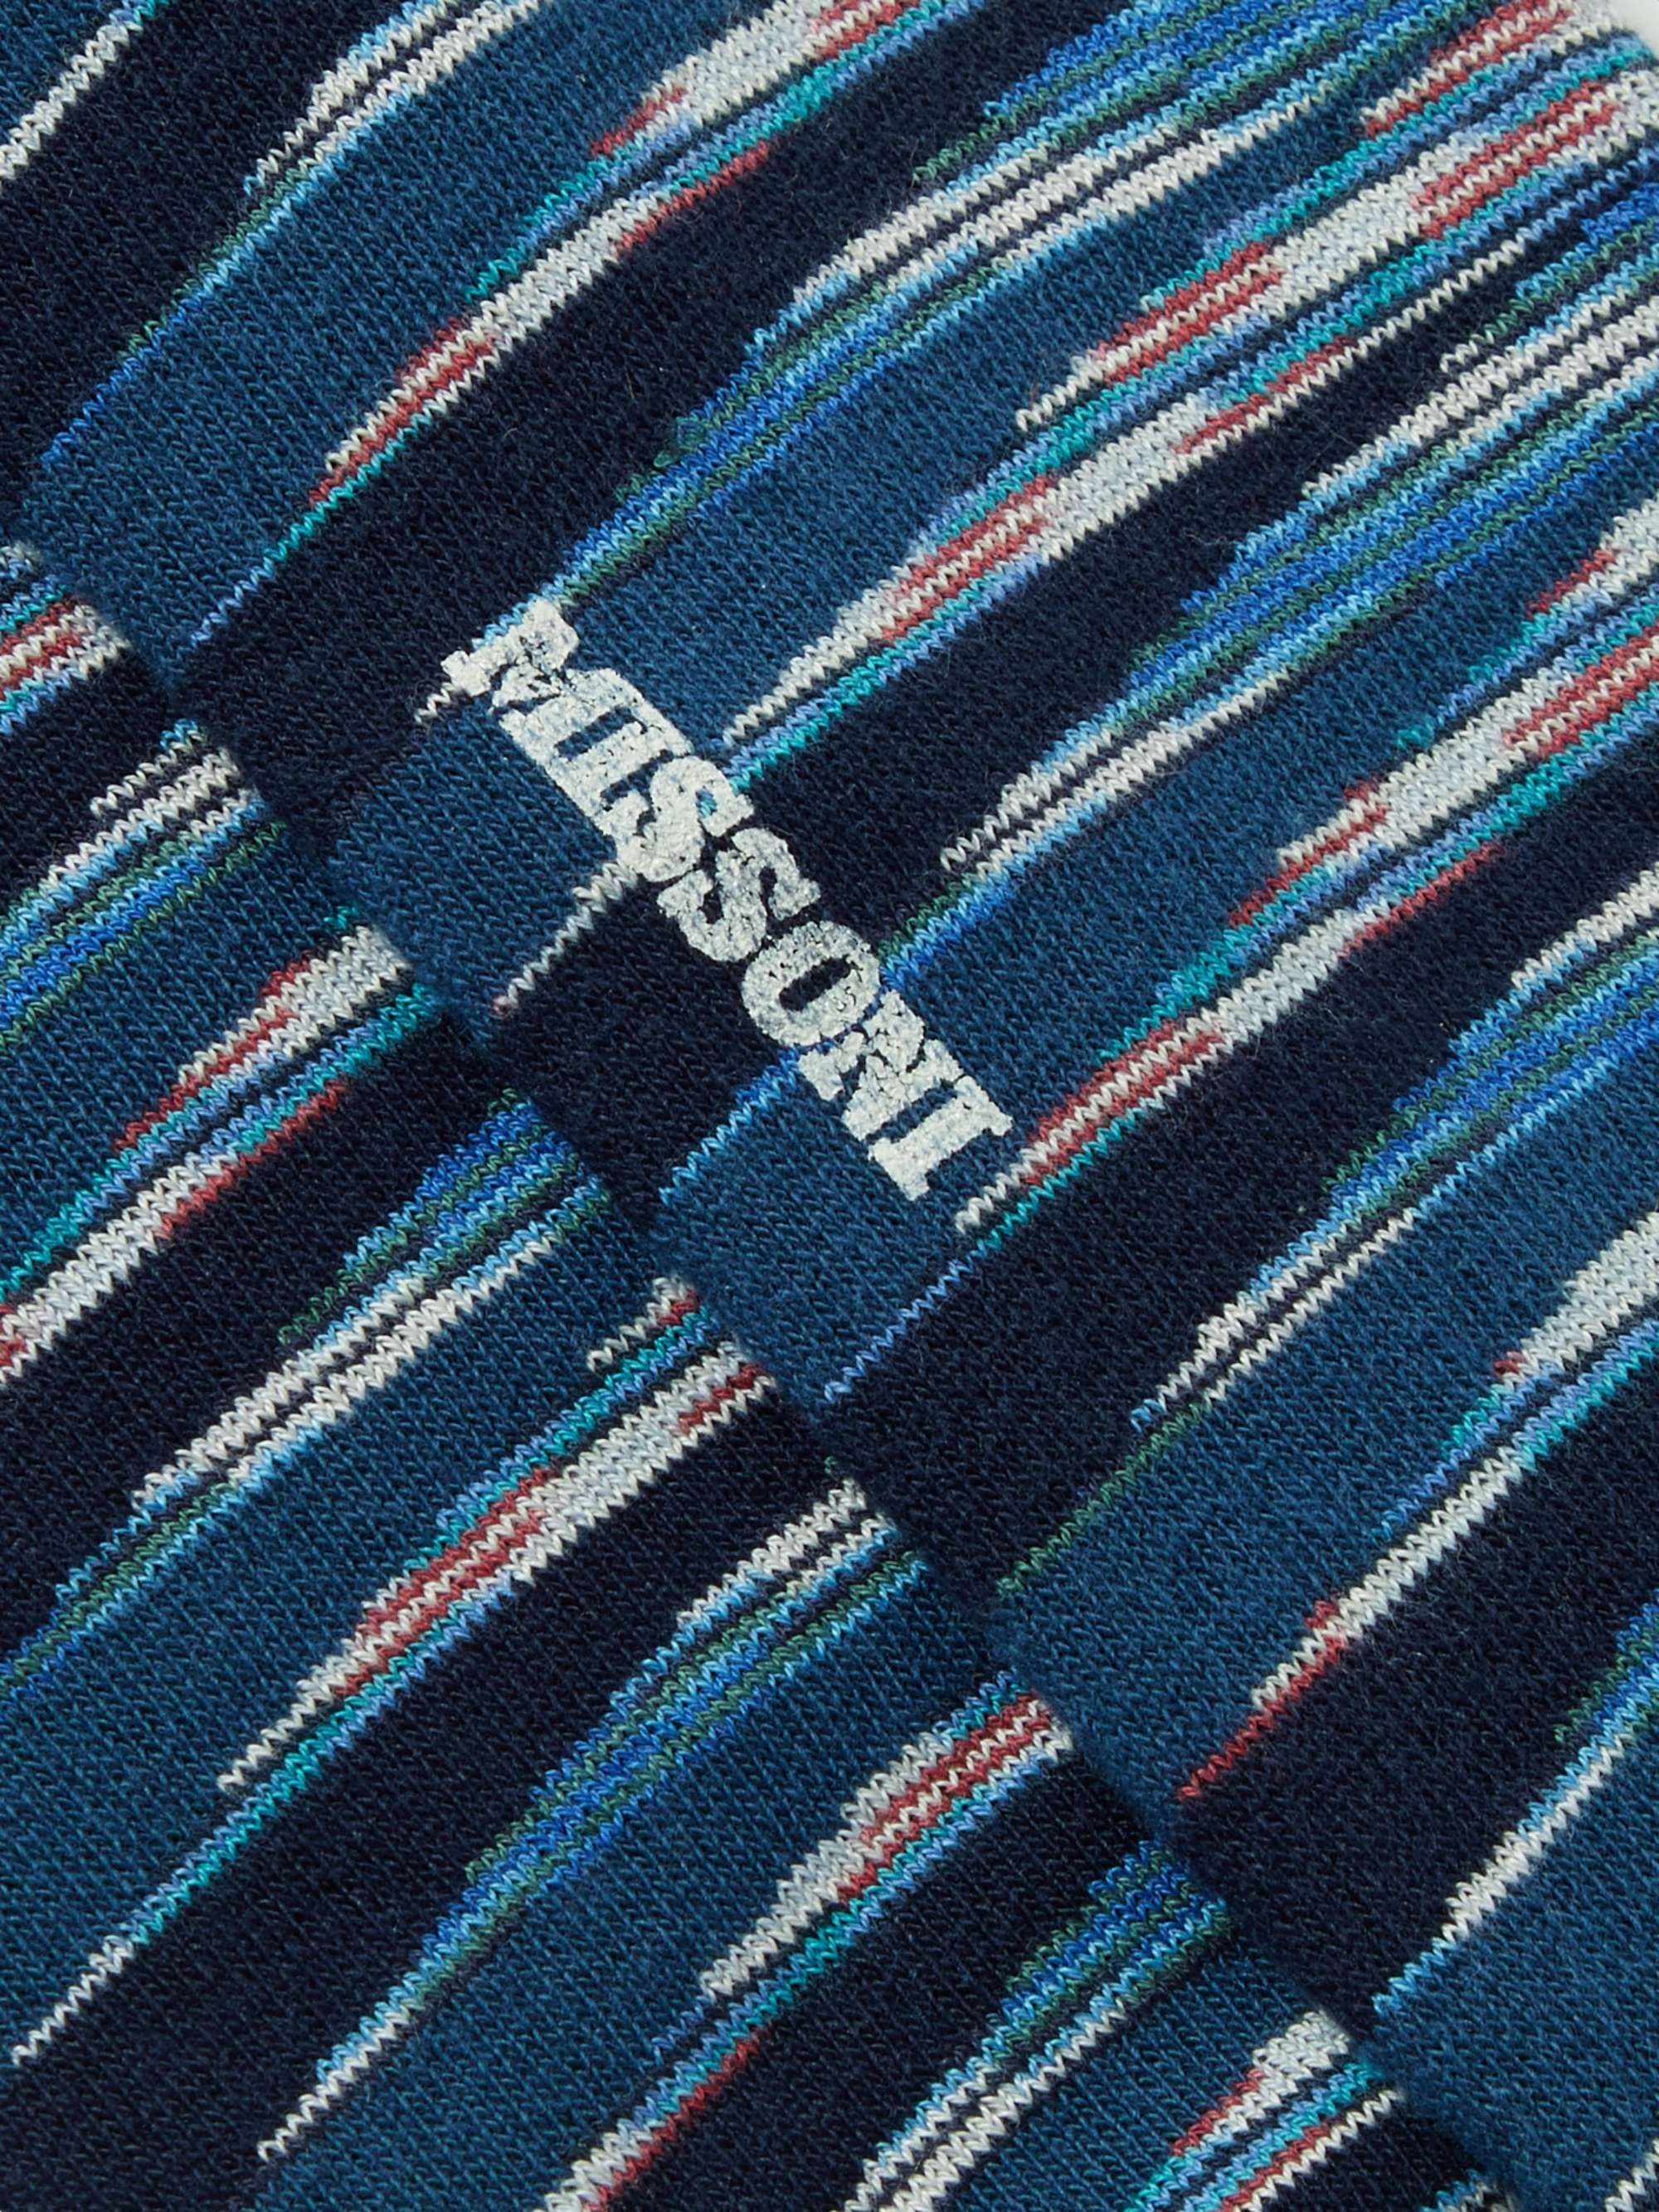 MISSONI Striped Cotton-Blend Socks